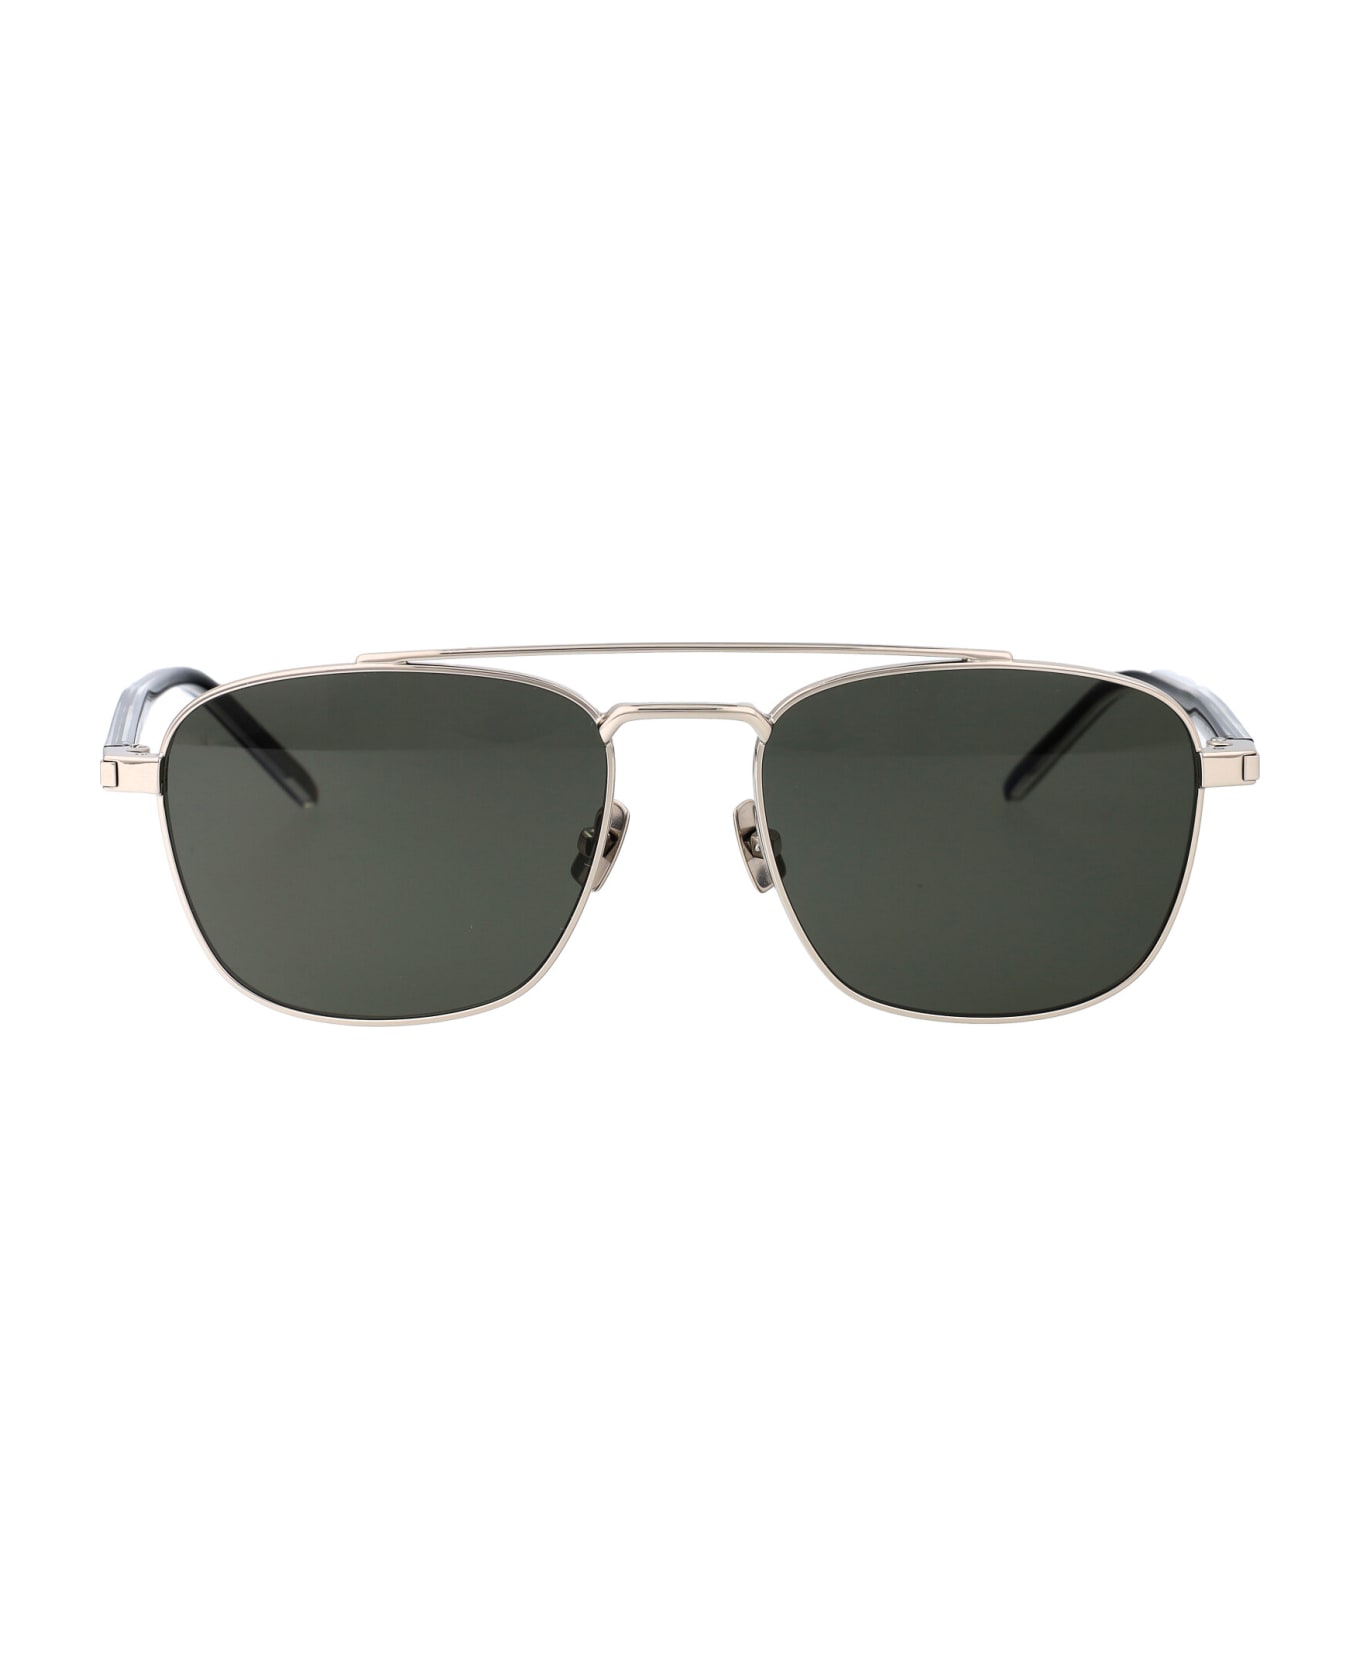 Saint Laurent Eyewear Sl 665 Sunglasses - 002 SILVER CRYSTAL GREY